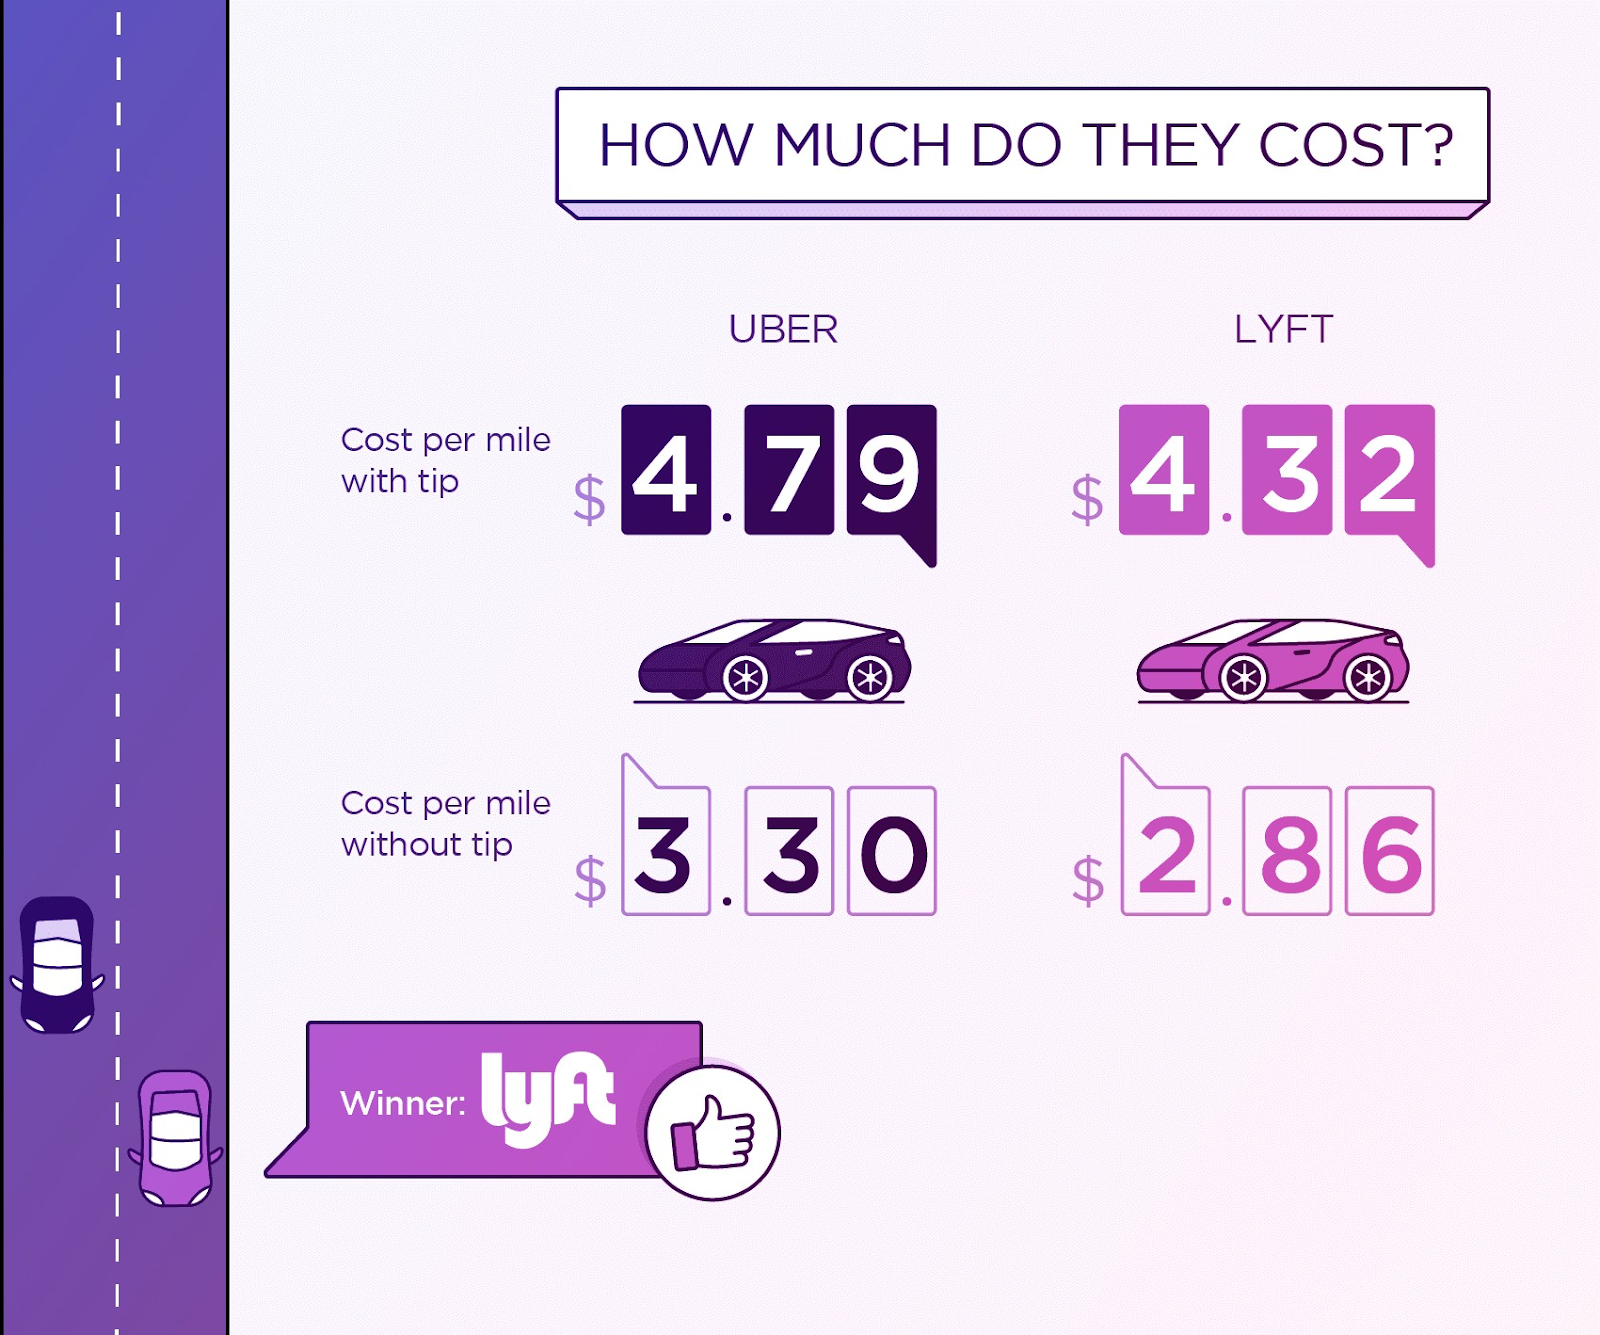 uber vs lyft - Pricing Strategies
